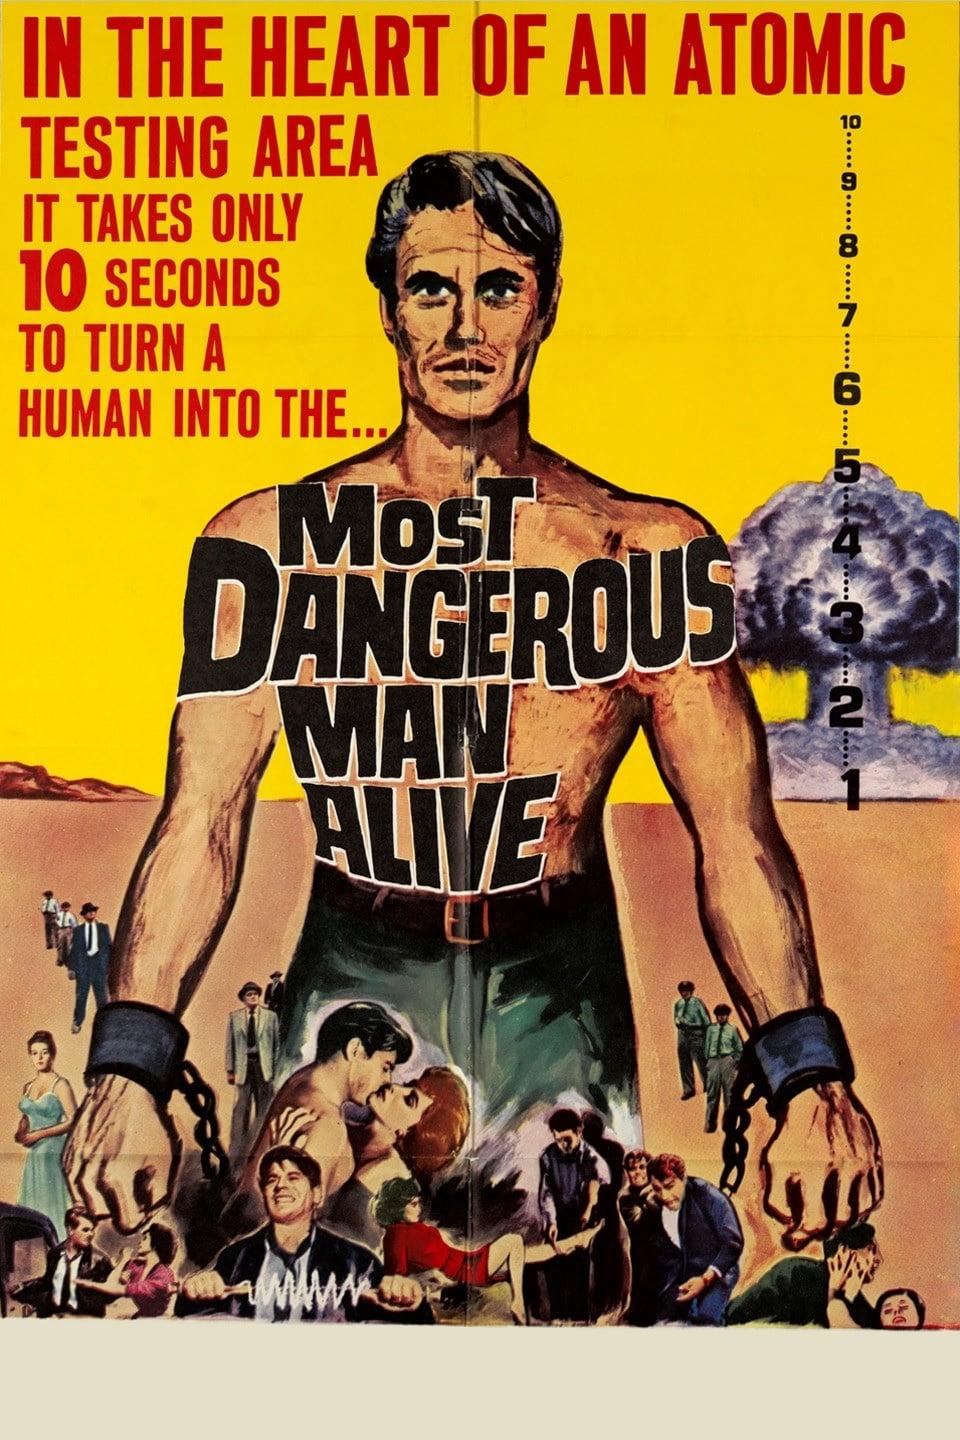 Most Dangerous Man Alive poster